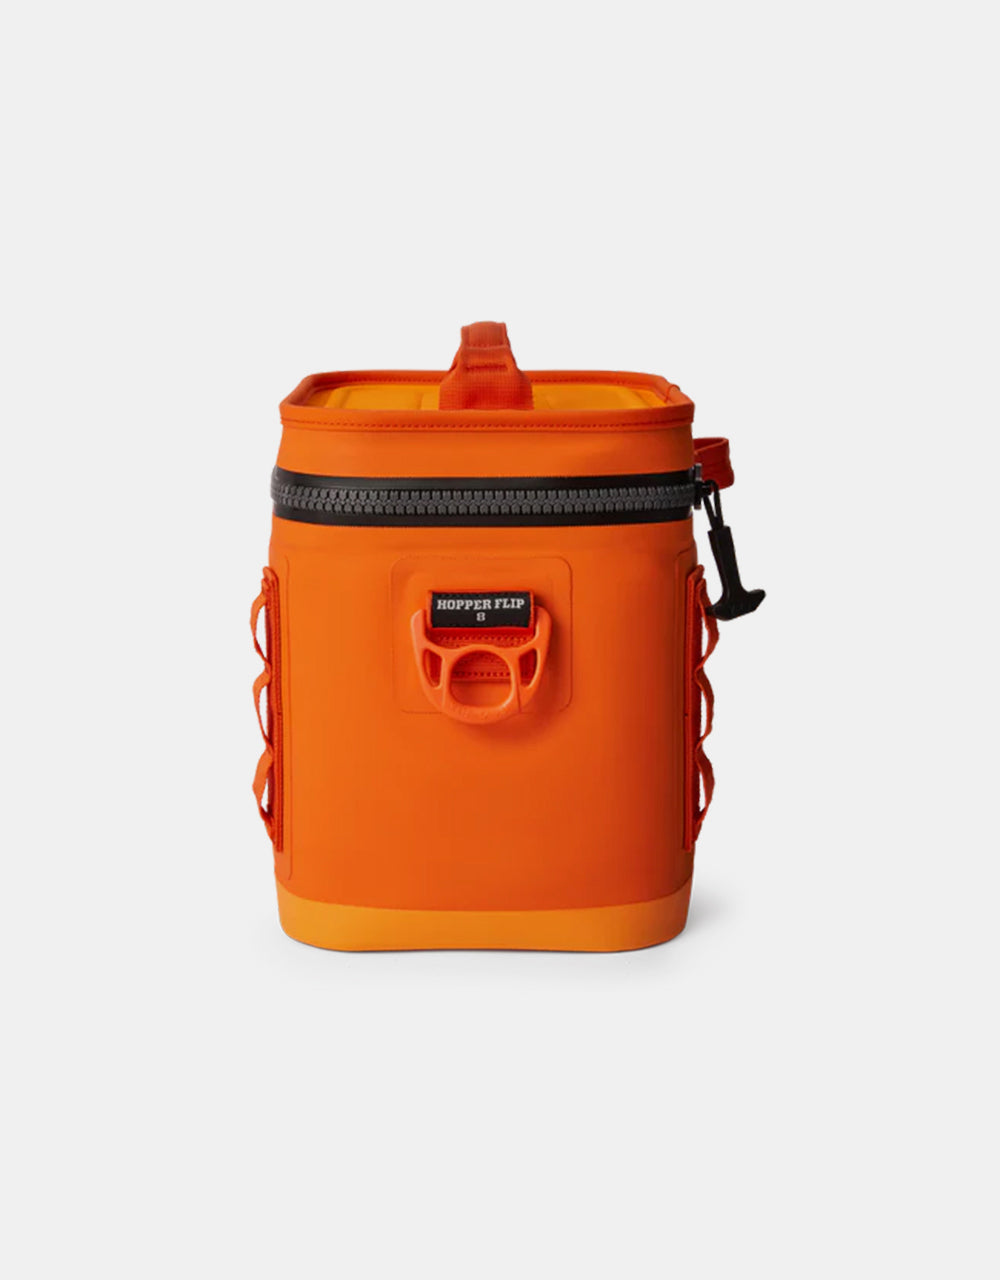 YETI Hopper Flip® 8 Soft Cooler - King Crab Orange